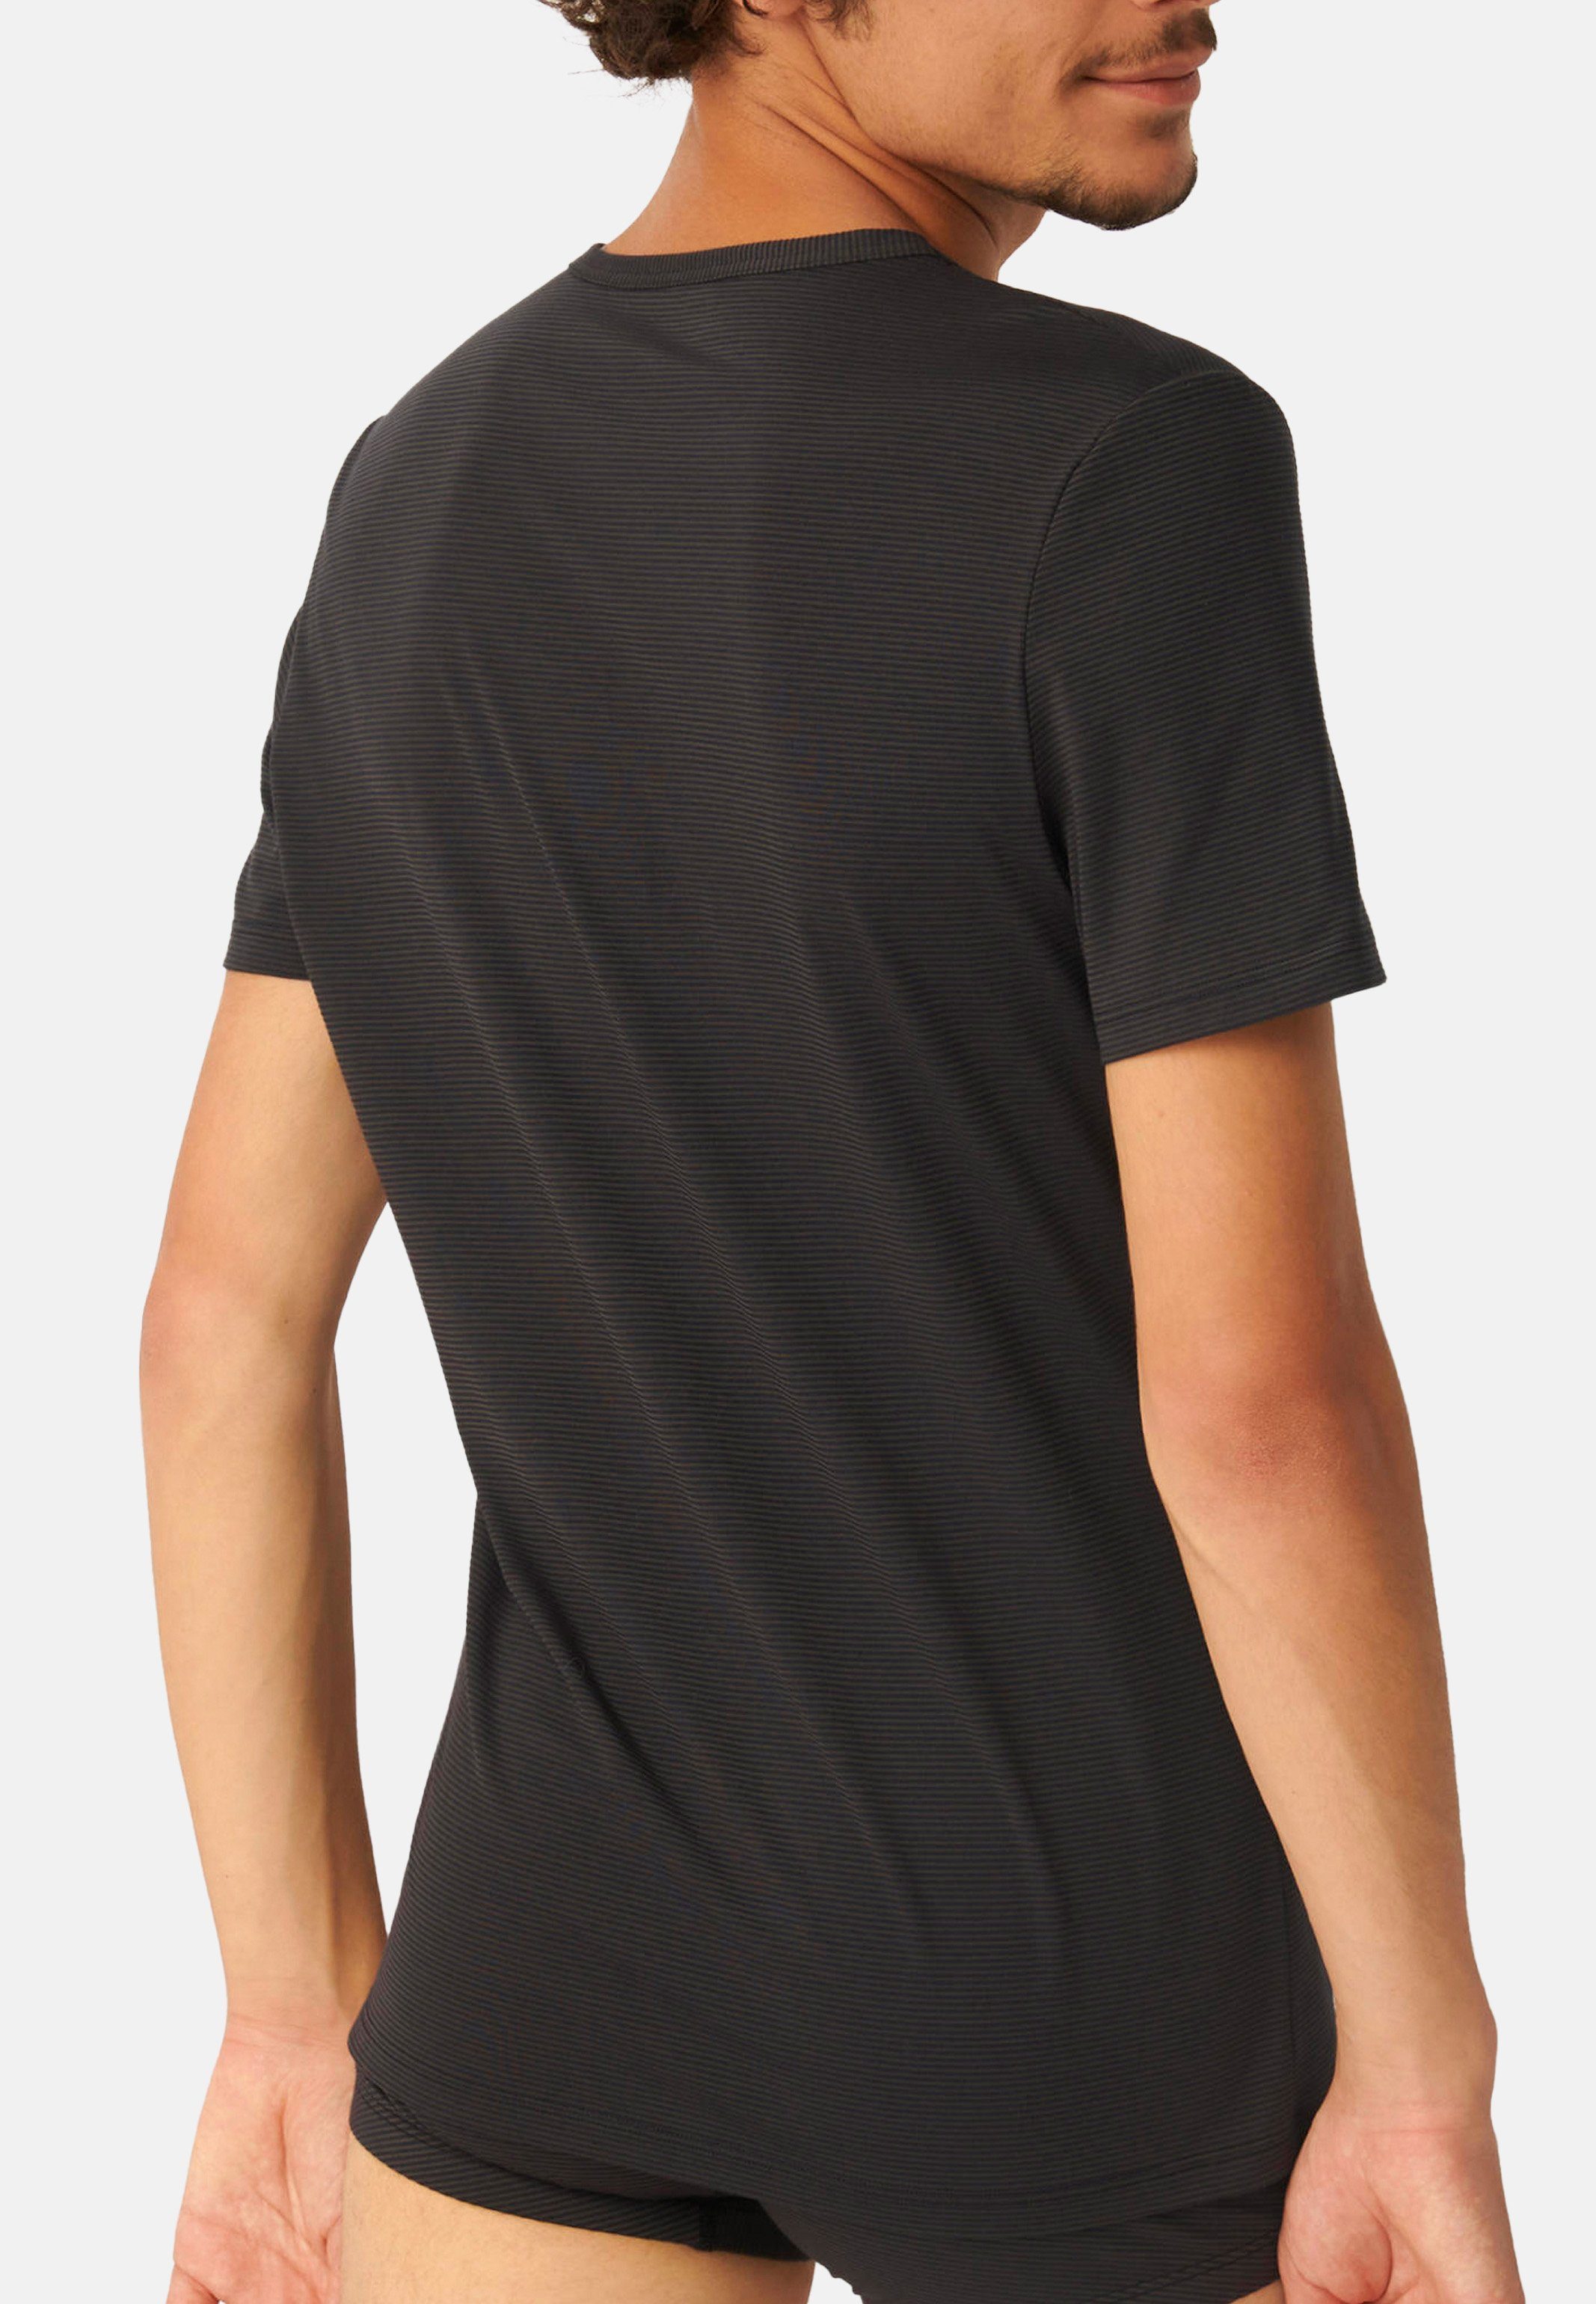 Pack Sloggi 2-St) (Spar-Set, Unterhemd - mit 2er Schwarz Shirt Kurzarm T-Shirt Kühl-Effekt - Baumwolle Cool Ever